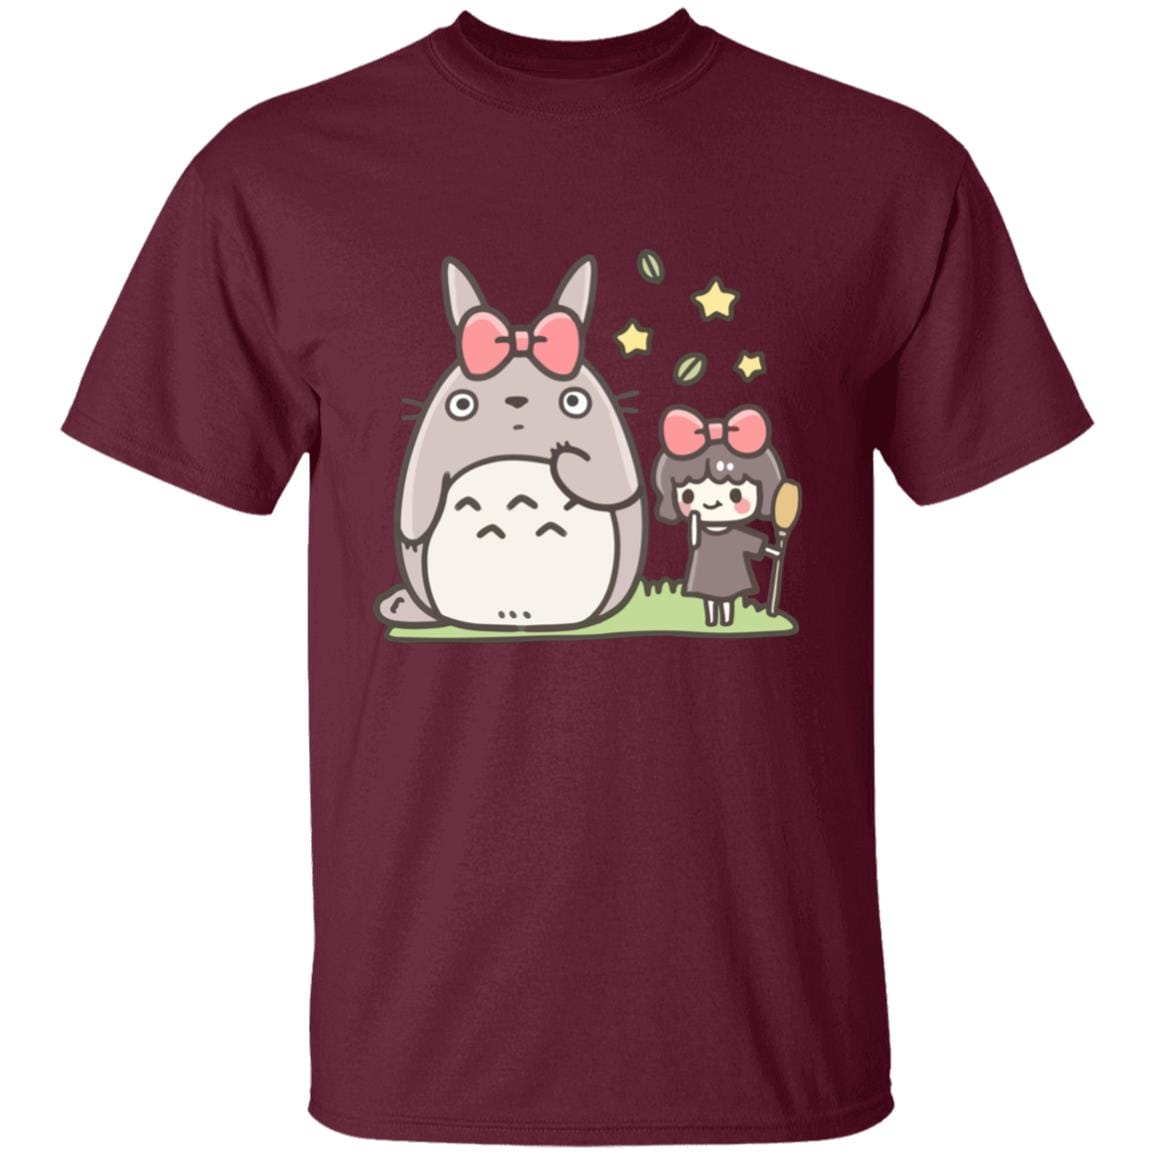 Totoro and Kiki T Shirt Ghibli Store ghibli.store